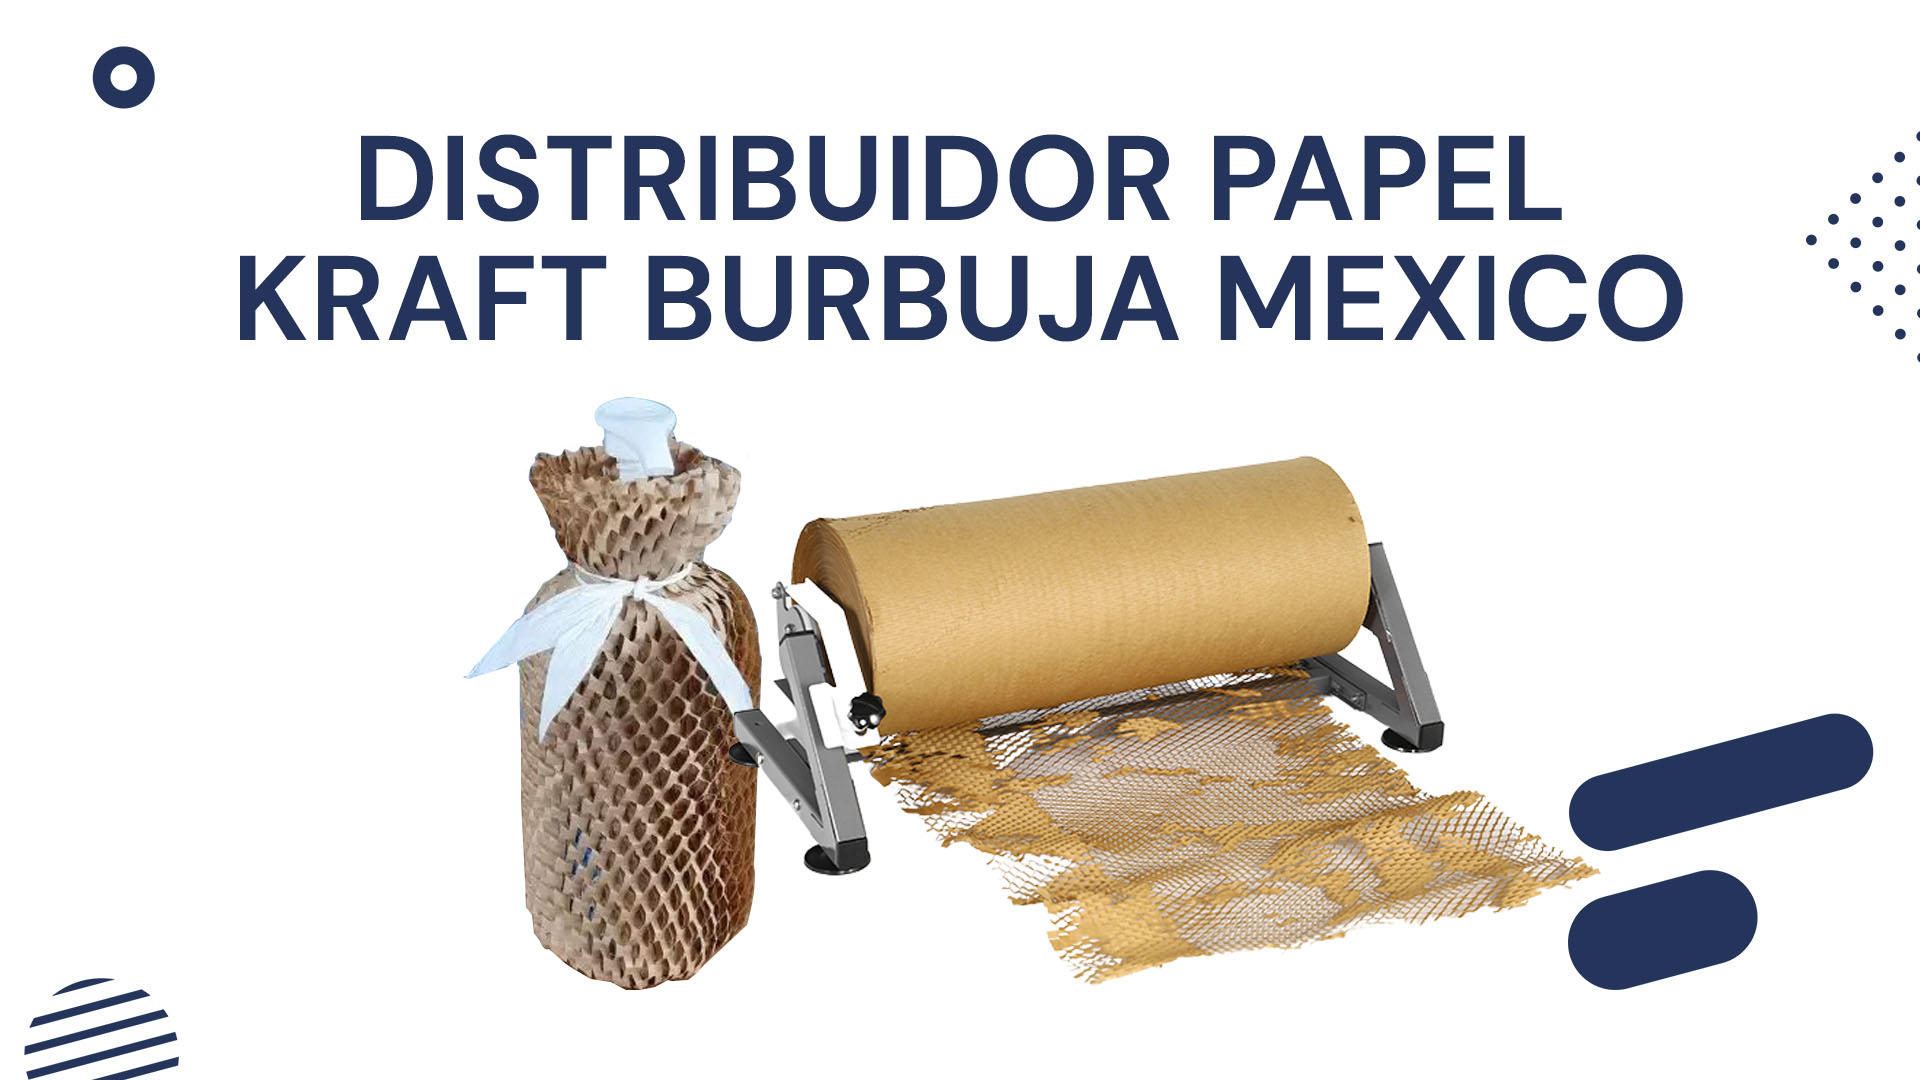 Distribuidor papel Kraft burbuja Mexico